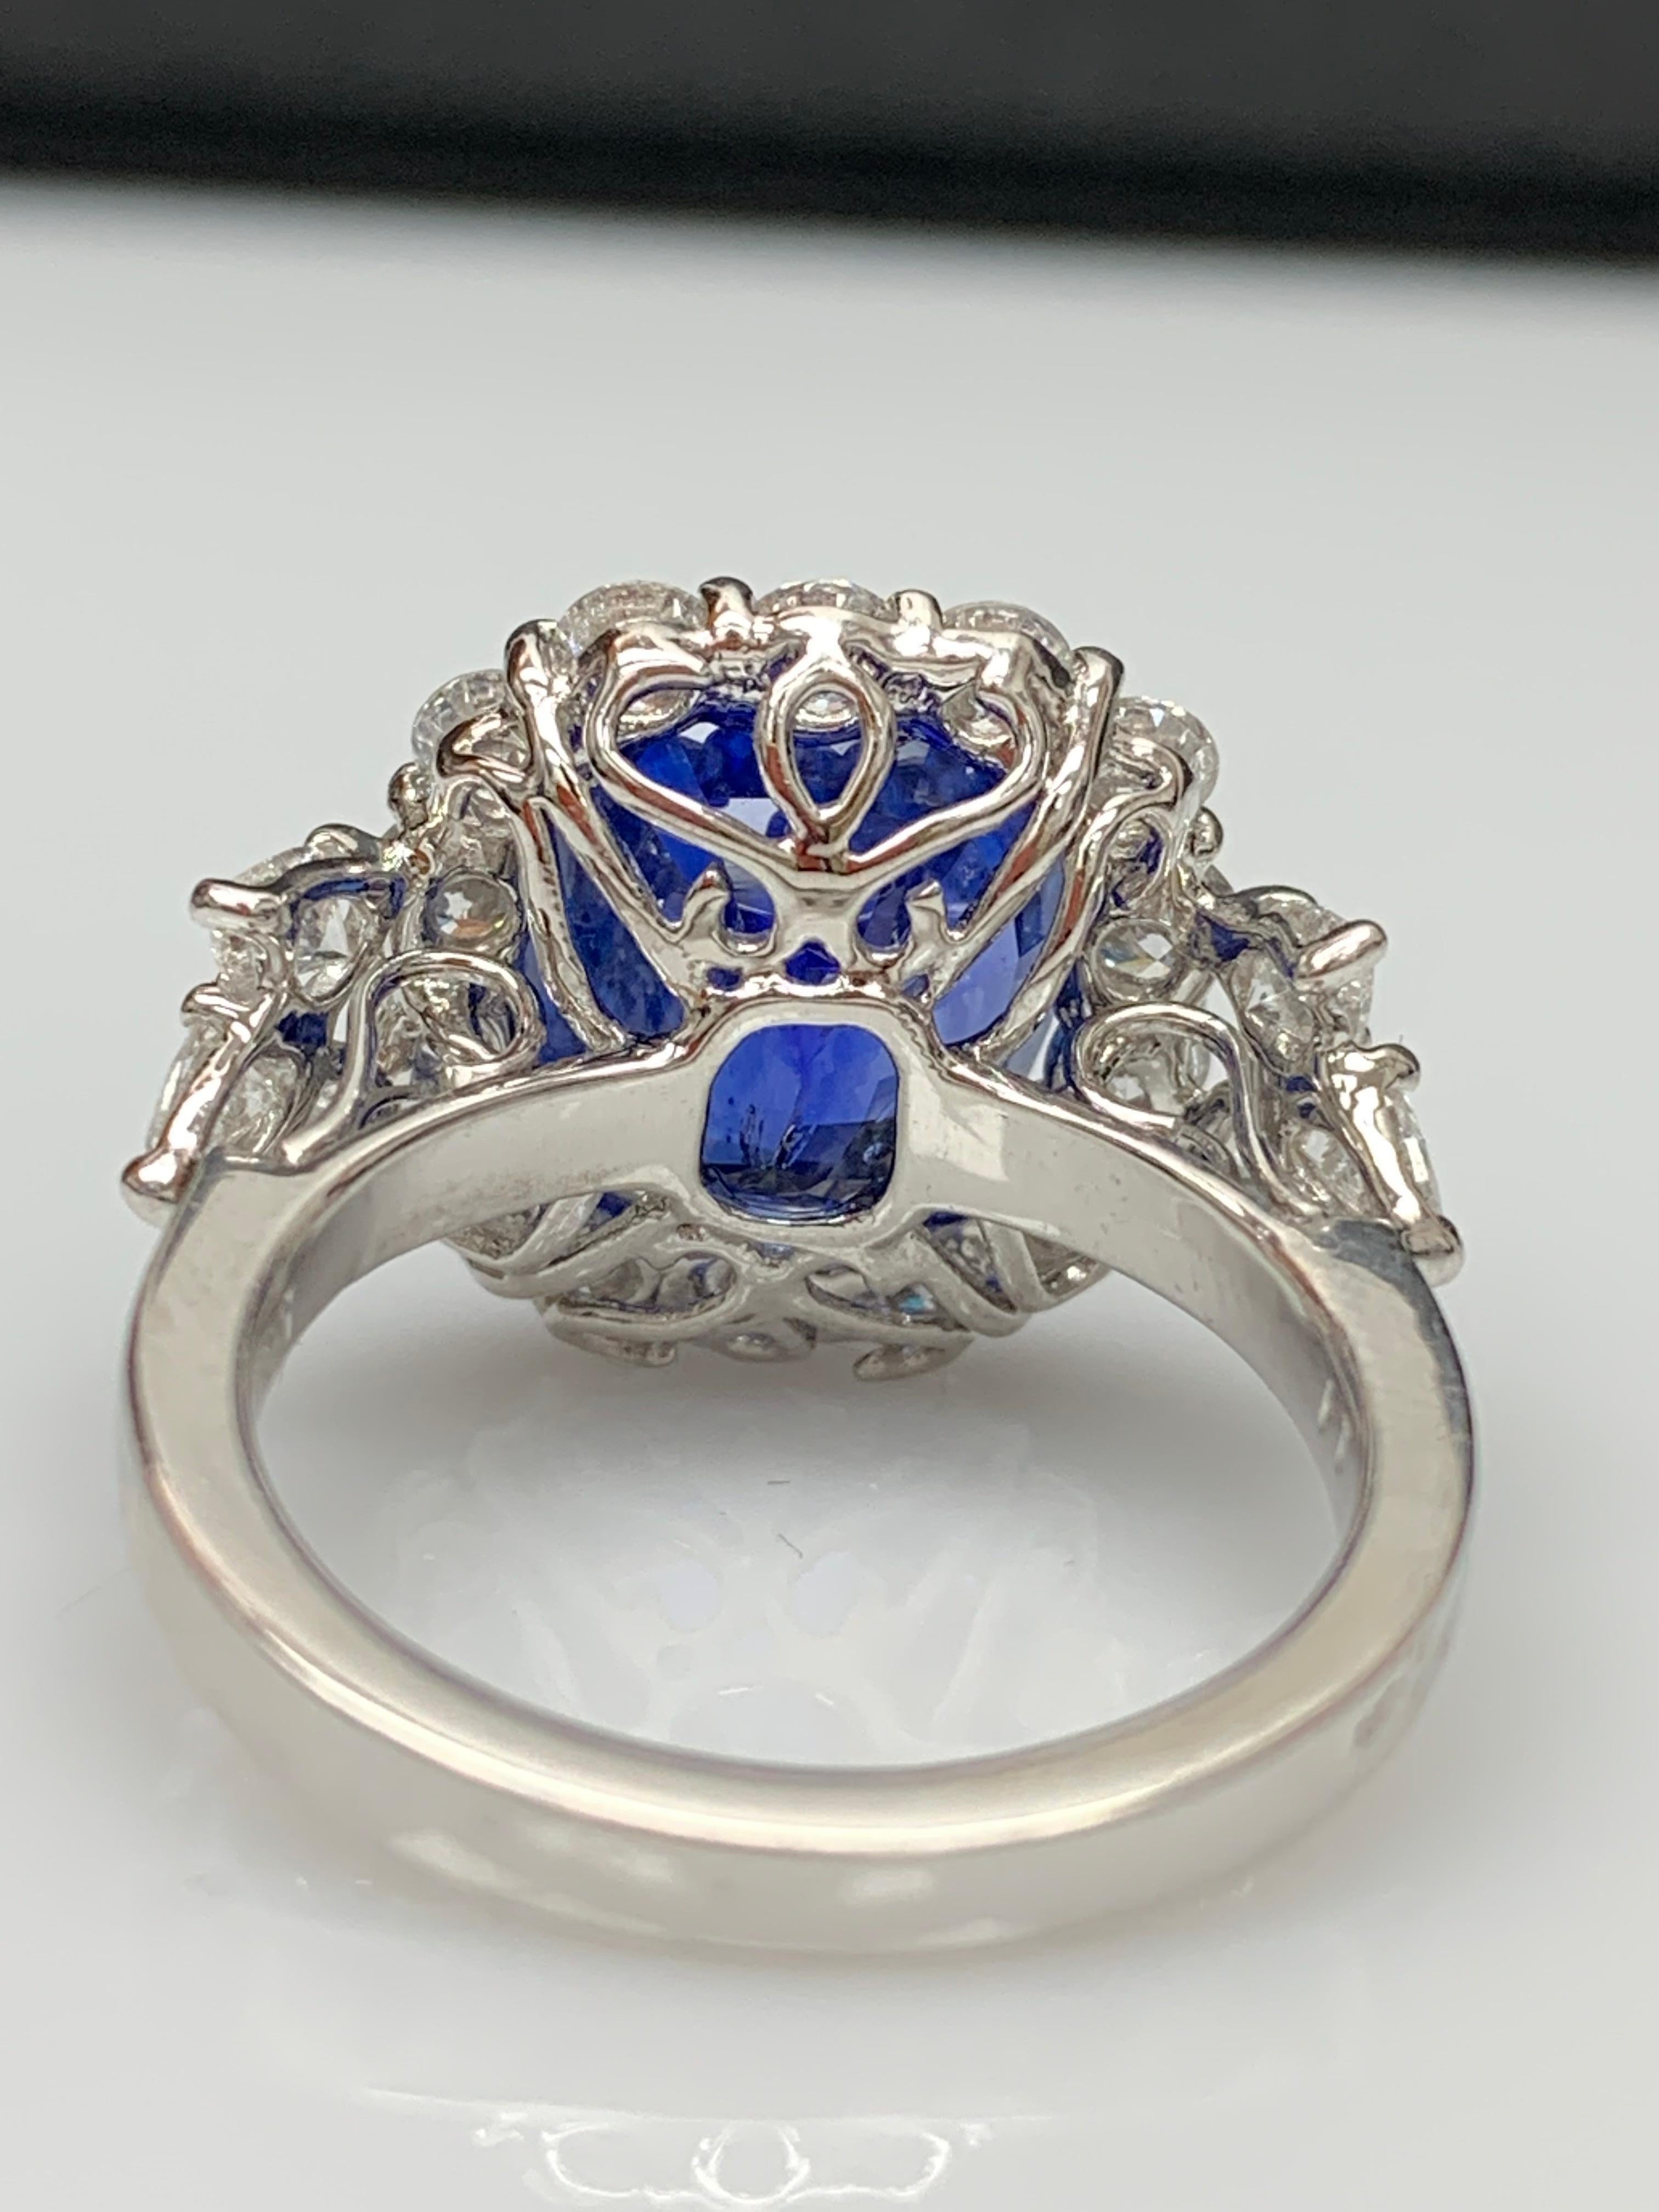 6.61 Carat Cushion Cut Blue Sapphire Diamond Engagement Ring in Platinum For Sale 11